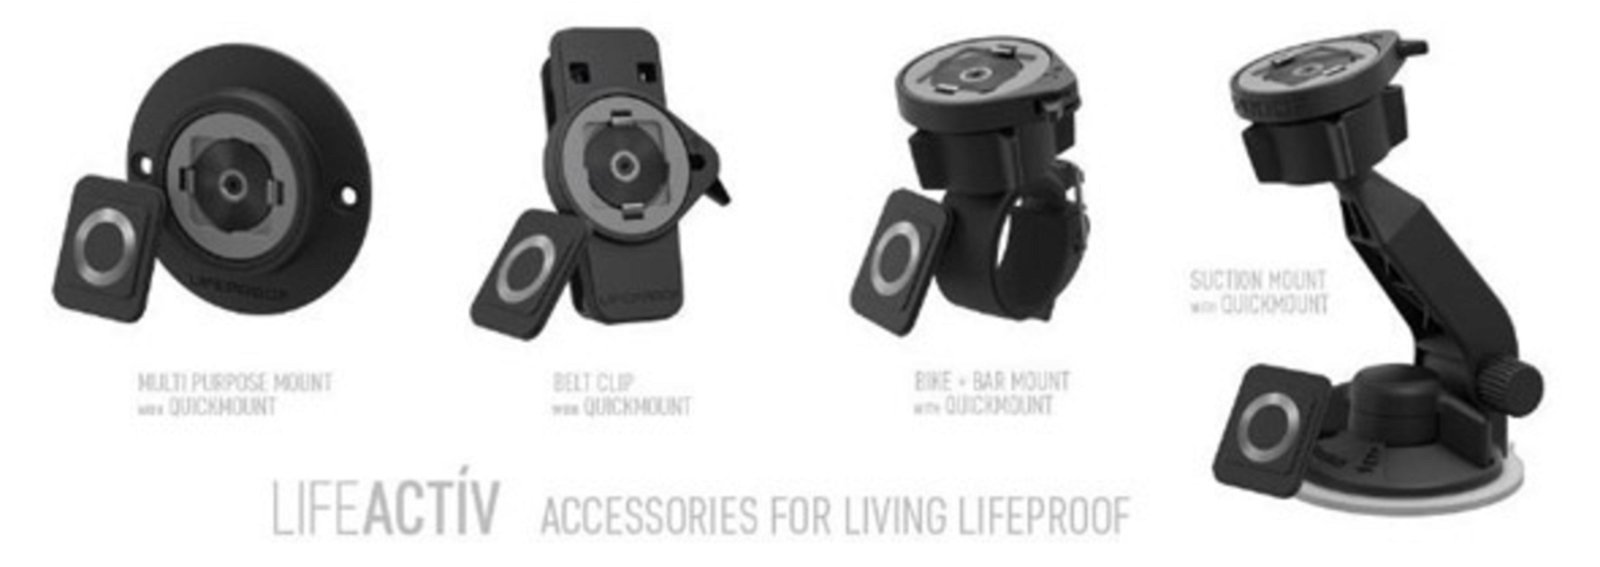 LifeProof LifeActiv Products